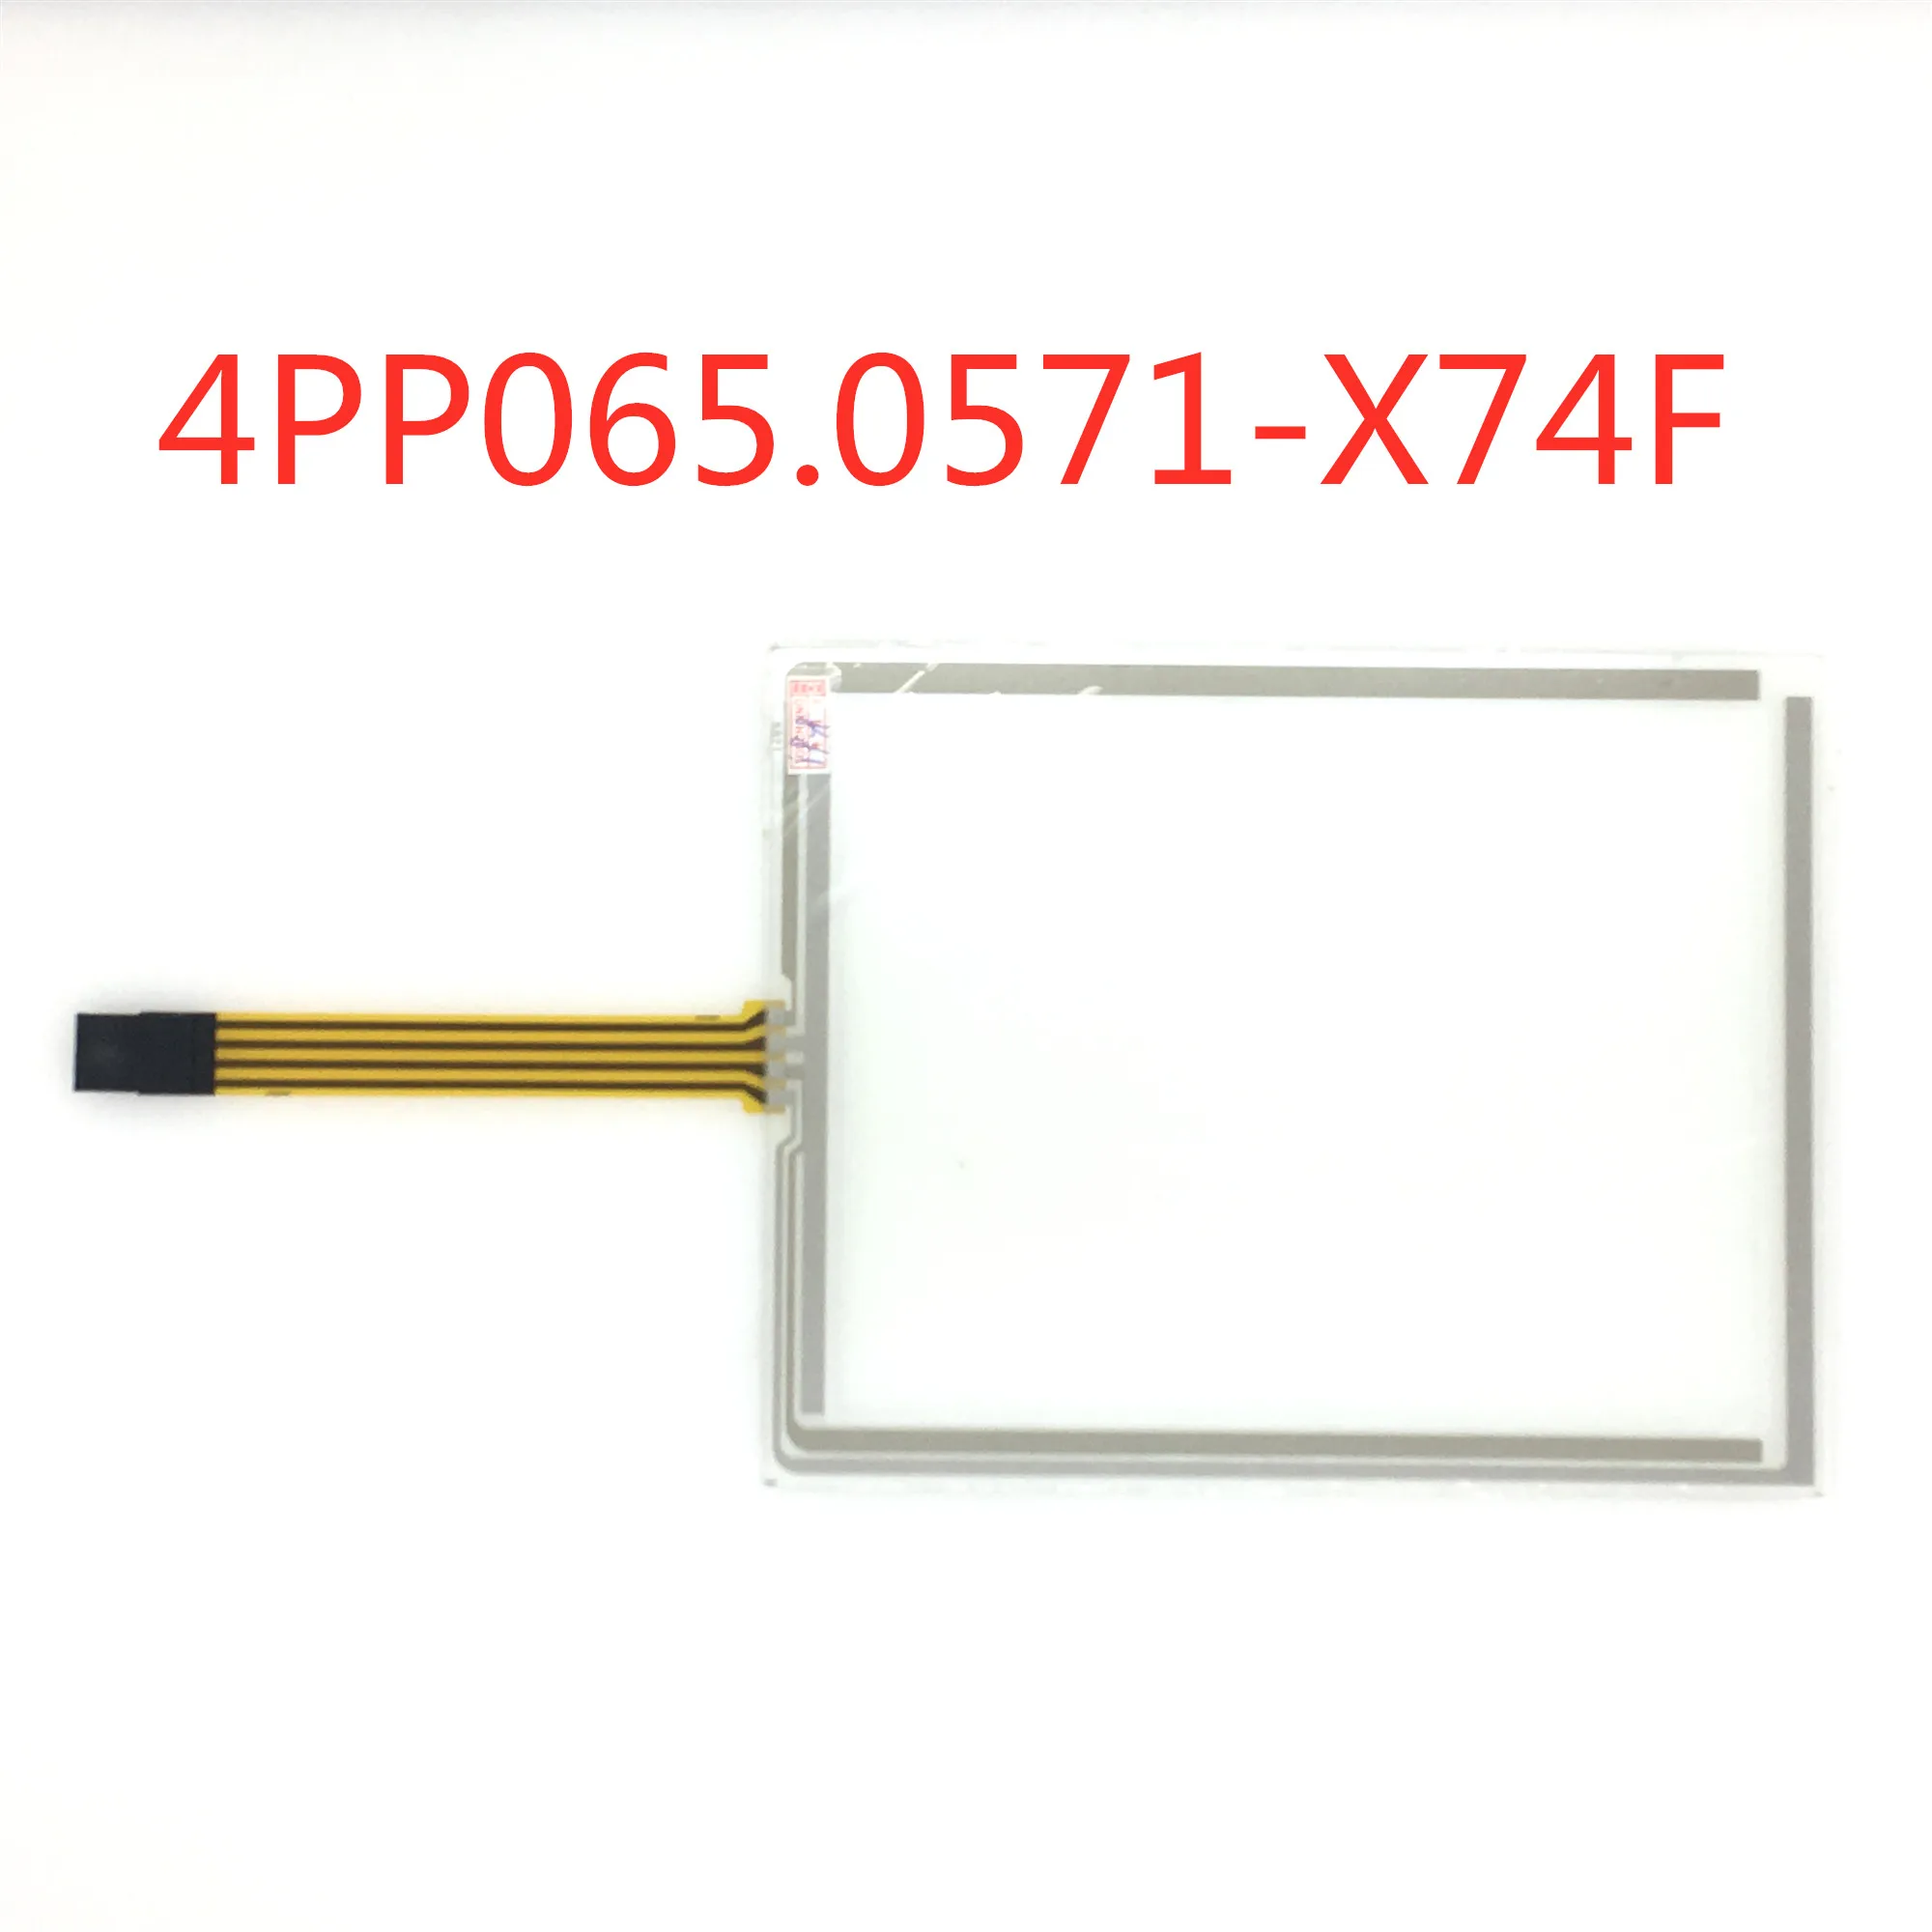 

Touch Screen Digitizer PP65 4PP065.0571-X74F 4PP065.0571.X74F 4PP065-0571-X74F Touch Panel Glass